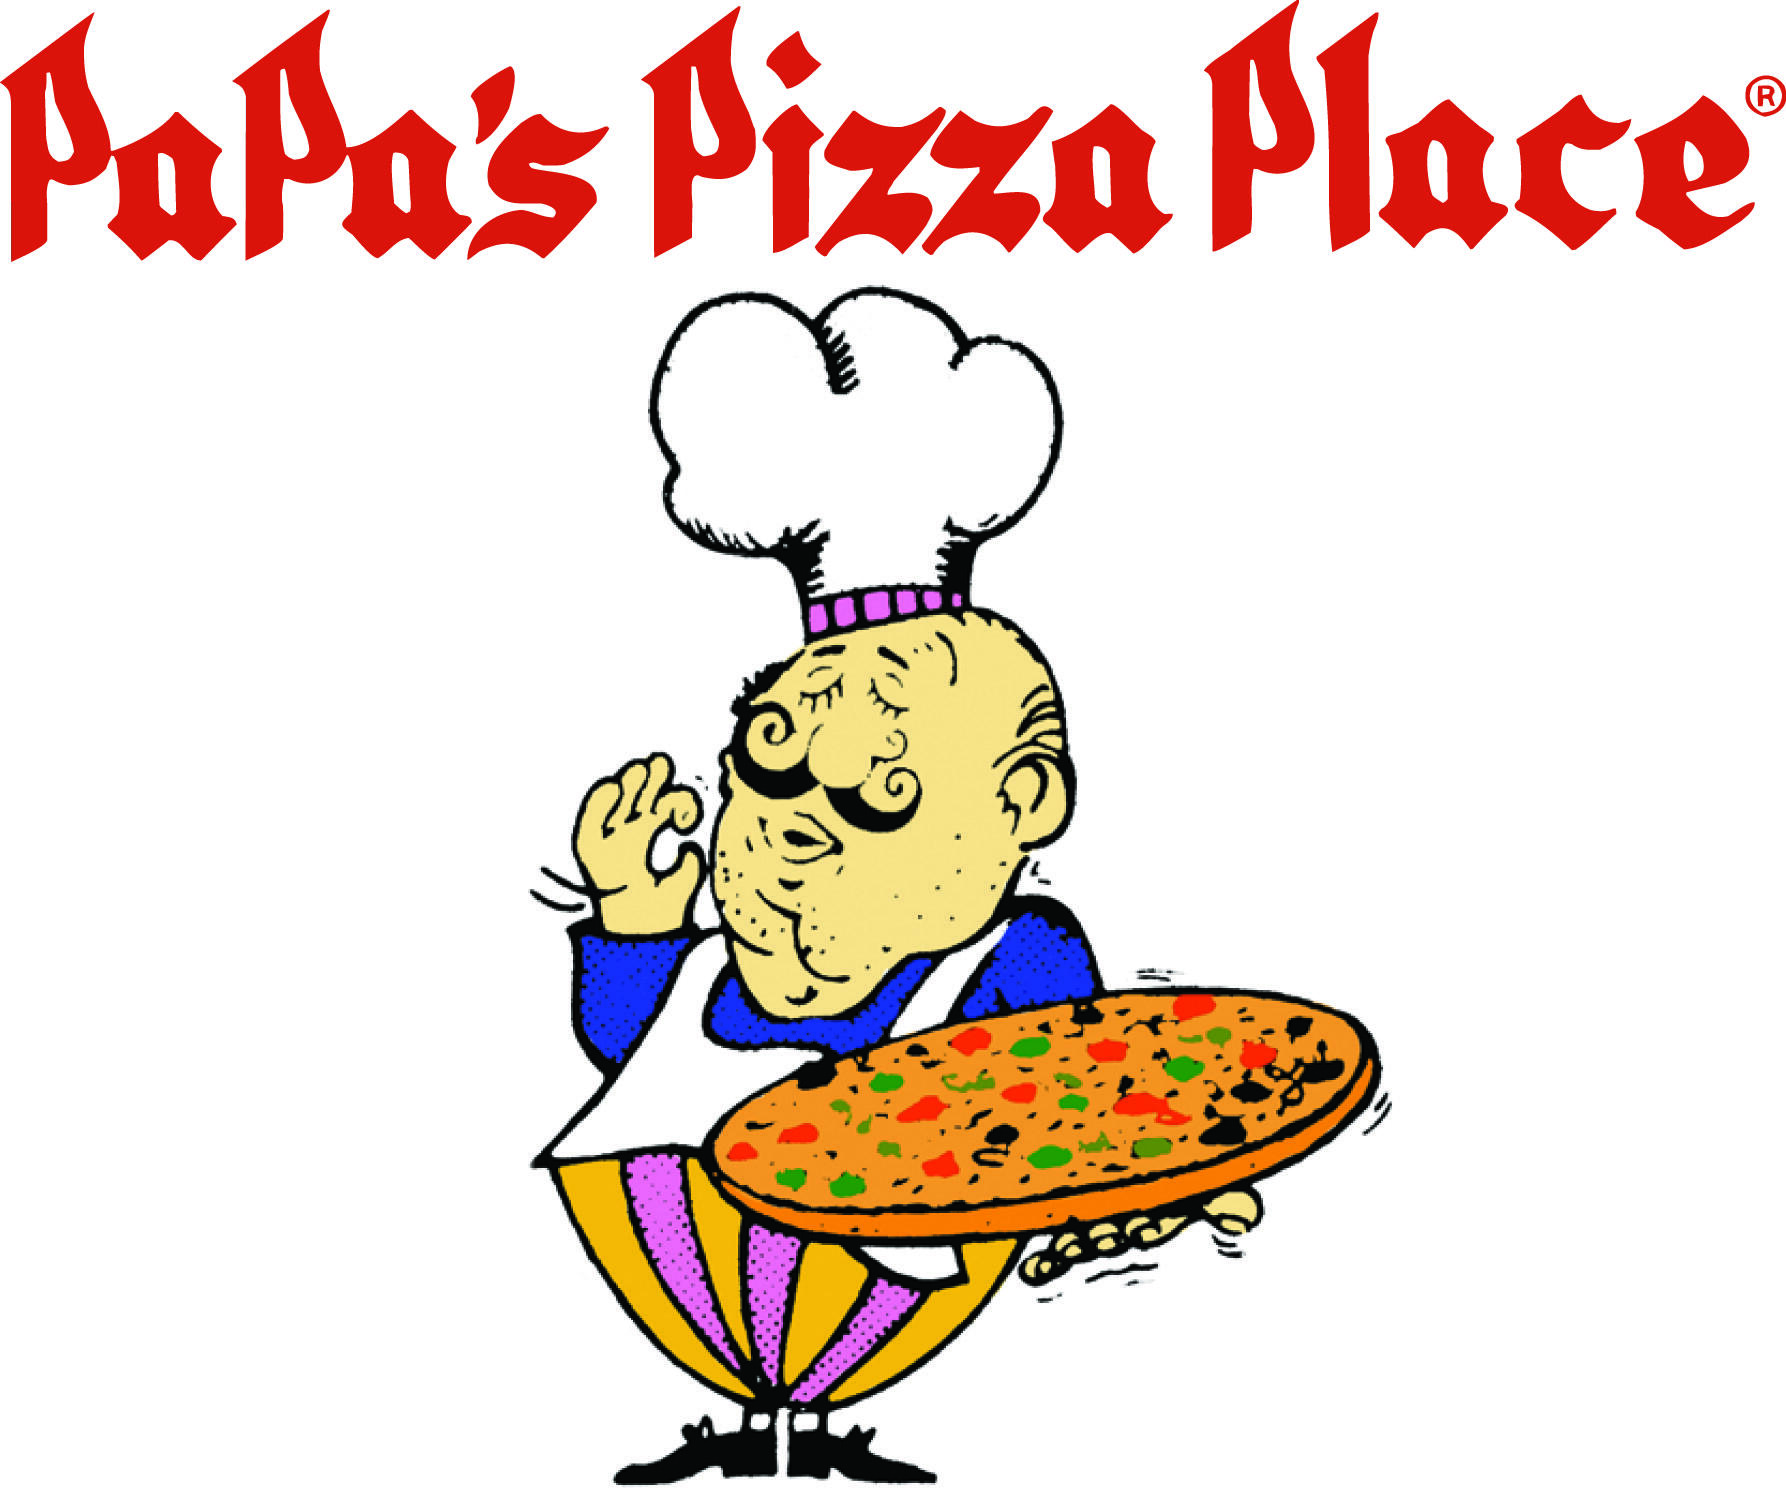 Pizza Woodridge IL  Papa's Pizza Place